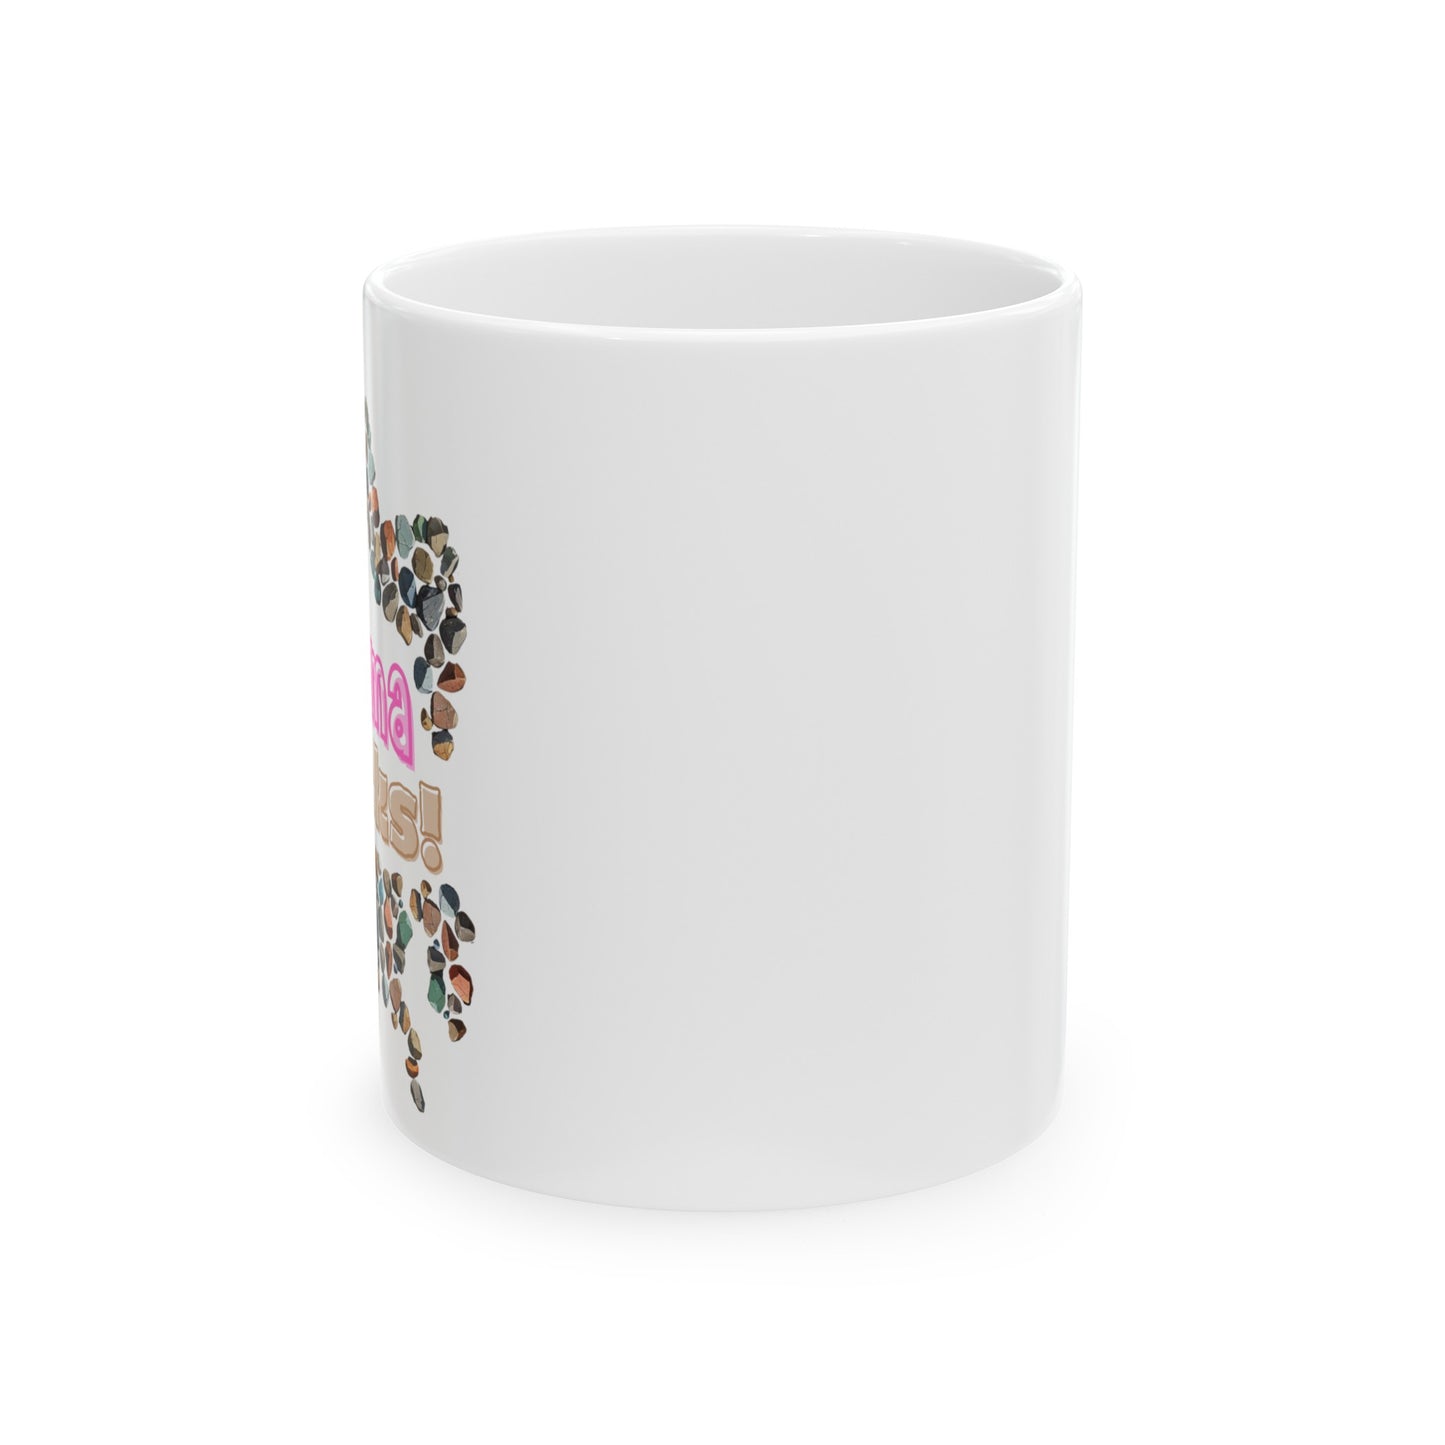 Mother’s Day: This Grandma Rocks! - Ceramic Mug